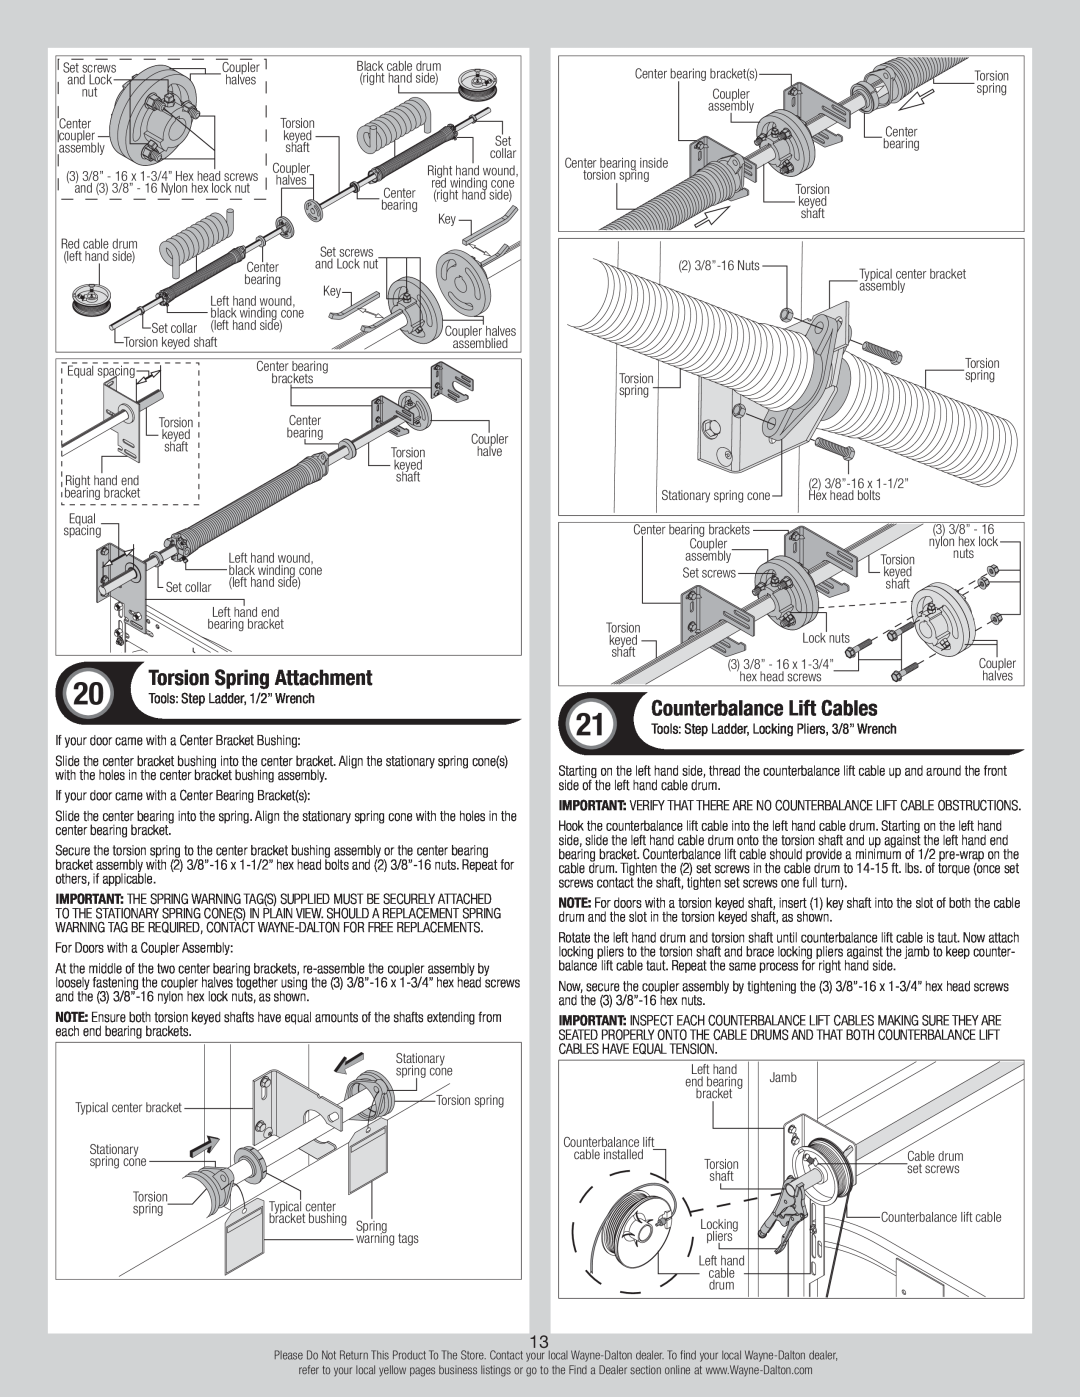 Wayne-Dalton 42, 43, 40, 47, 45 installation instructions Counterbalance Lift Cables, Torsion Spring Attachment 